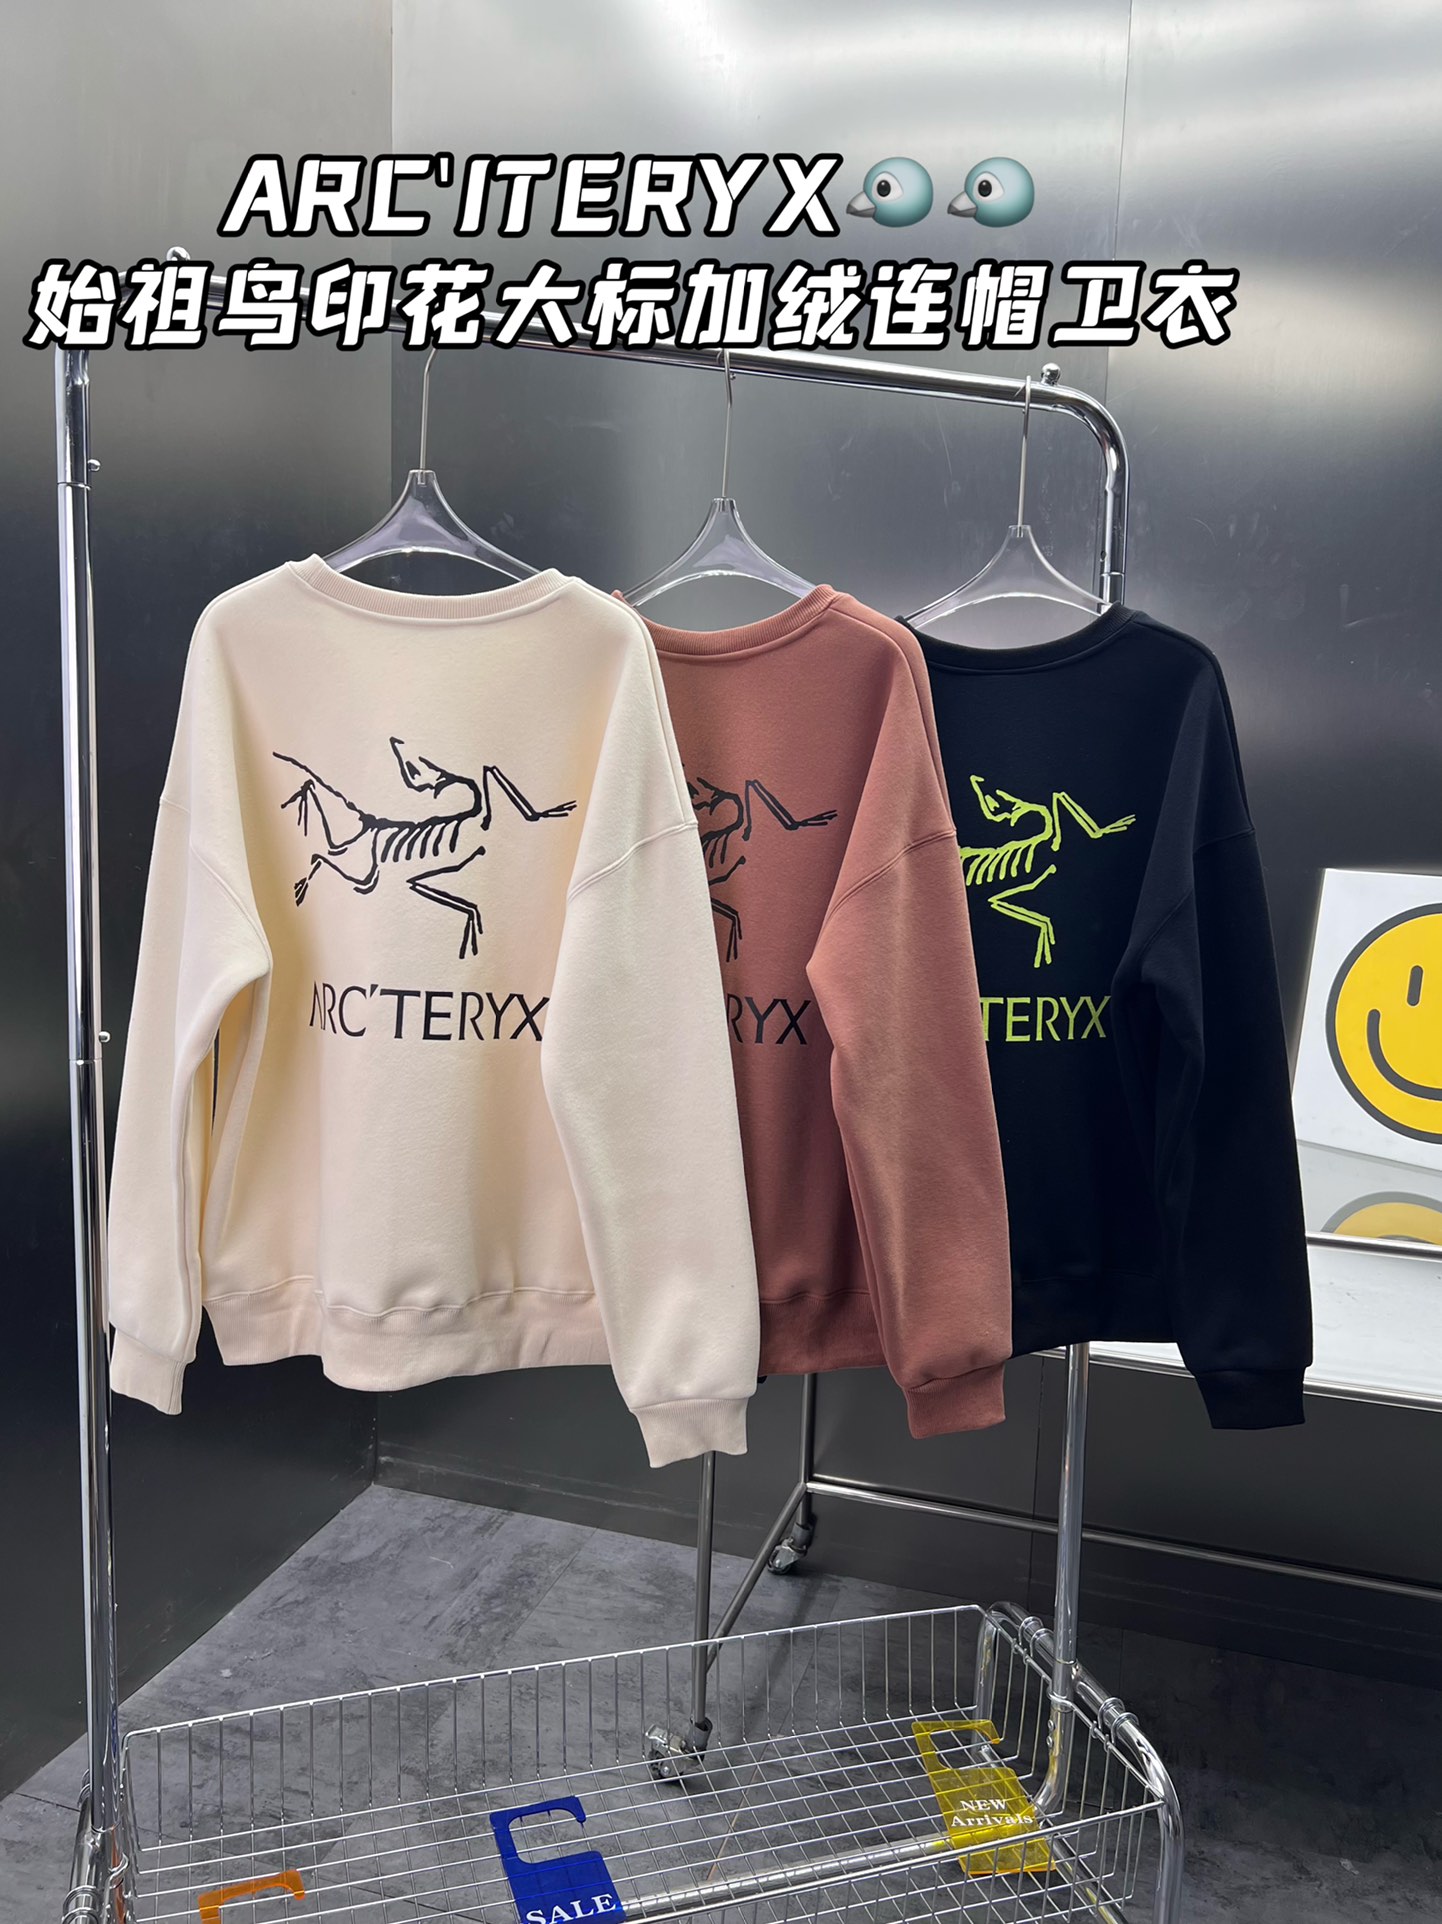 Arc’teryx Clothing Hoodies Printing Cotton Fashion Hooded Top